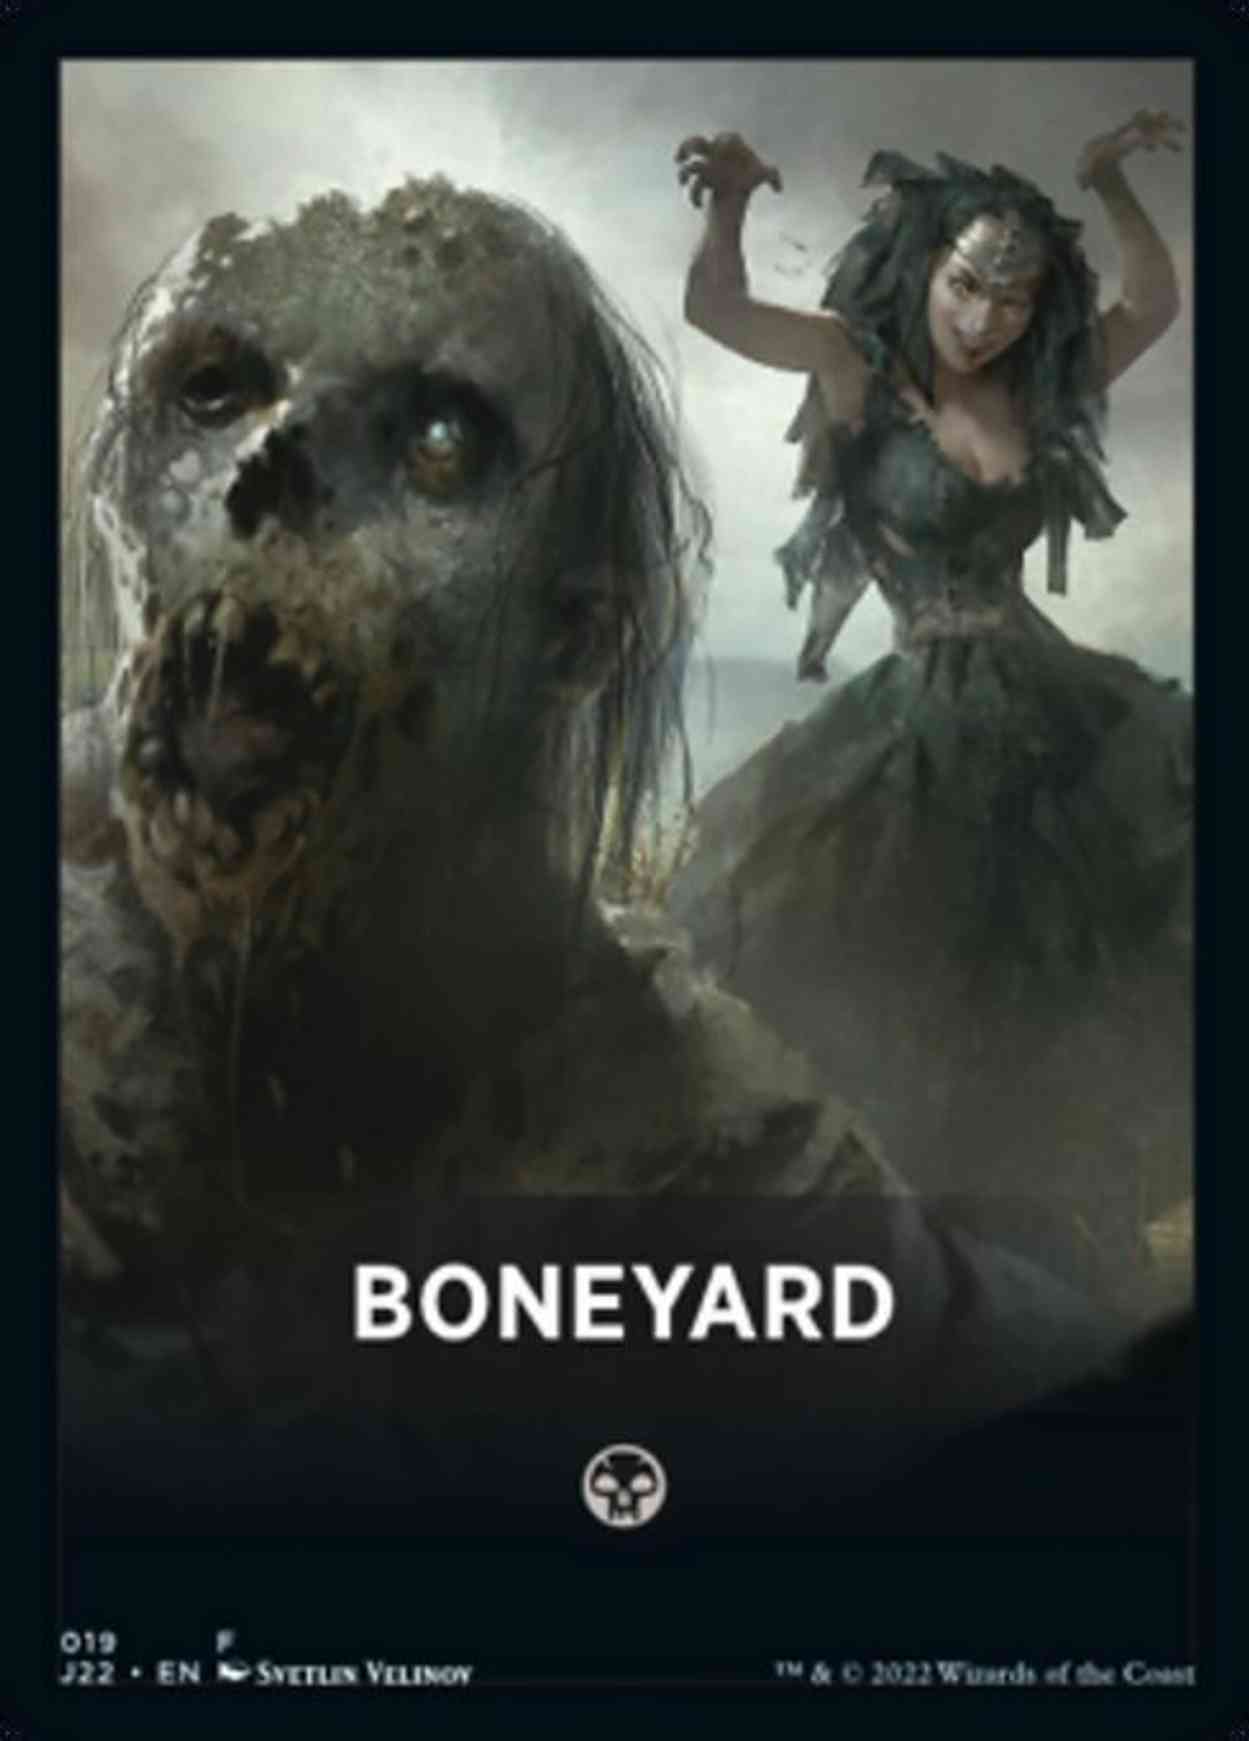 Boneyard Theme Card magic card front